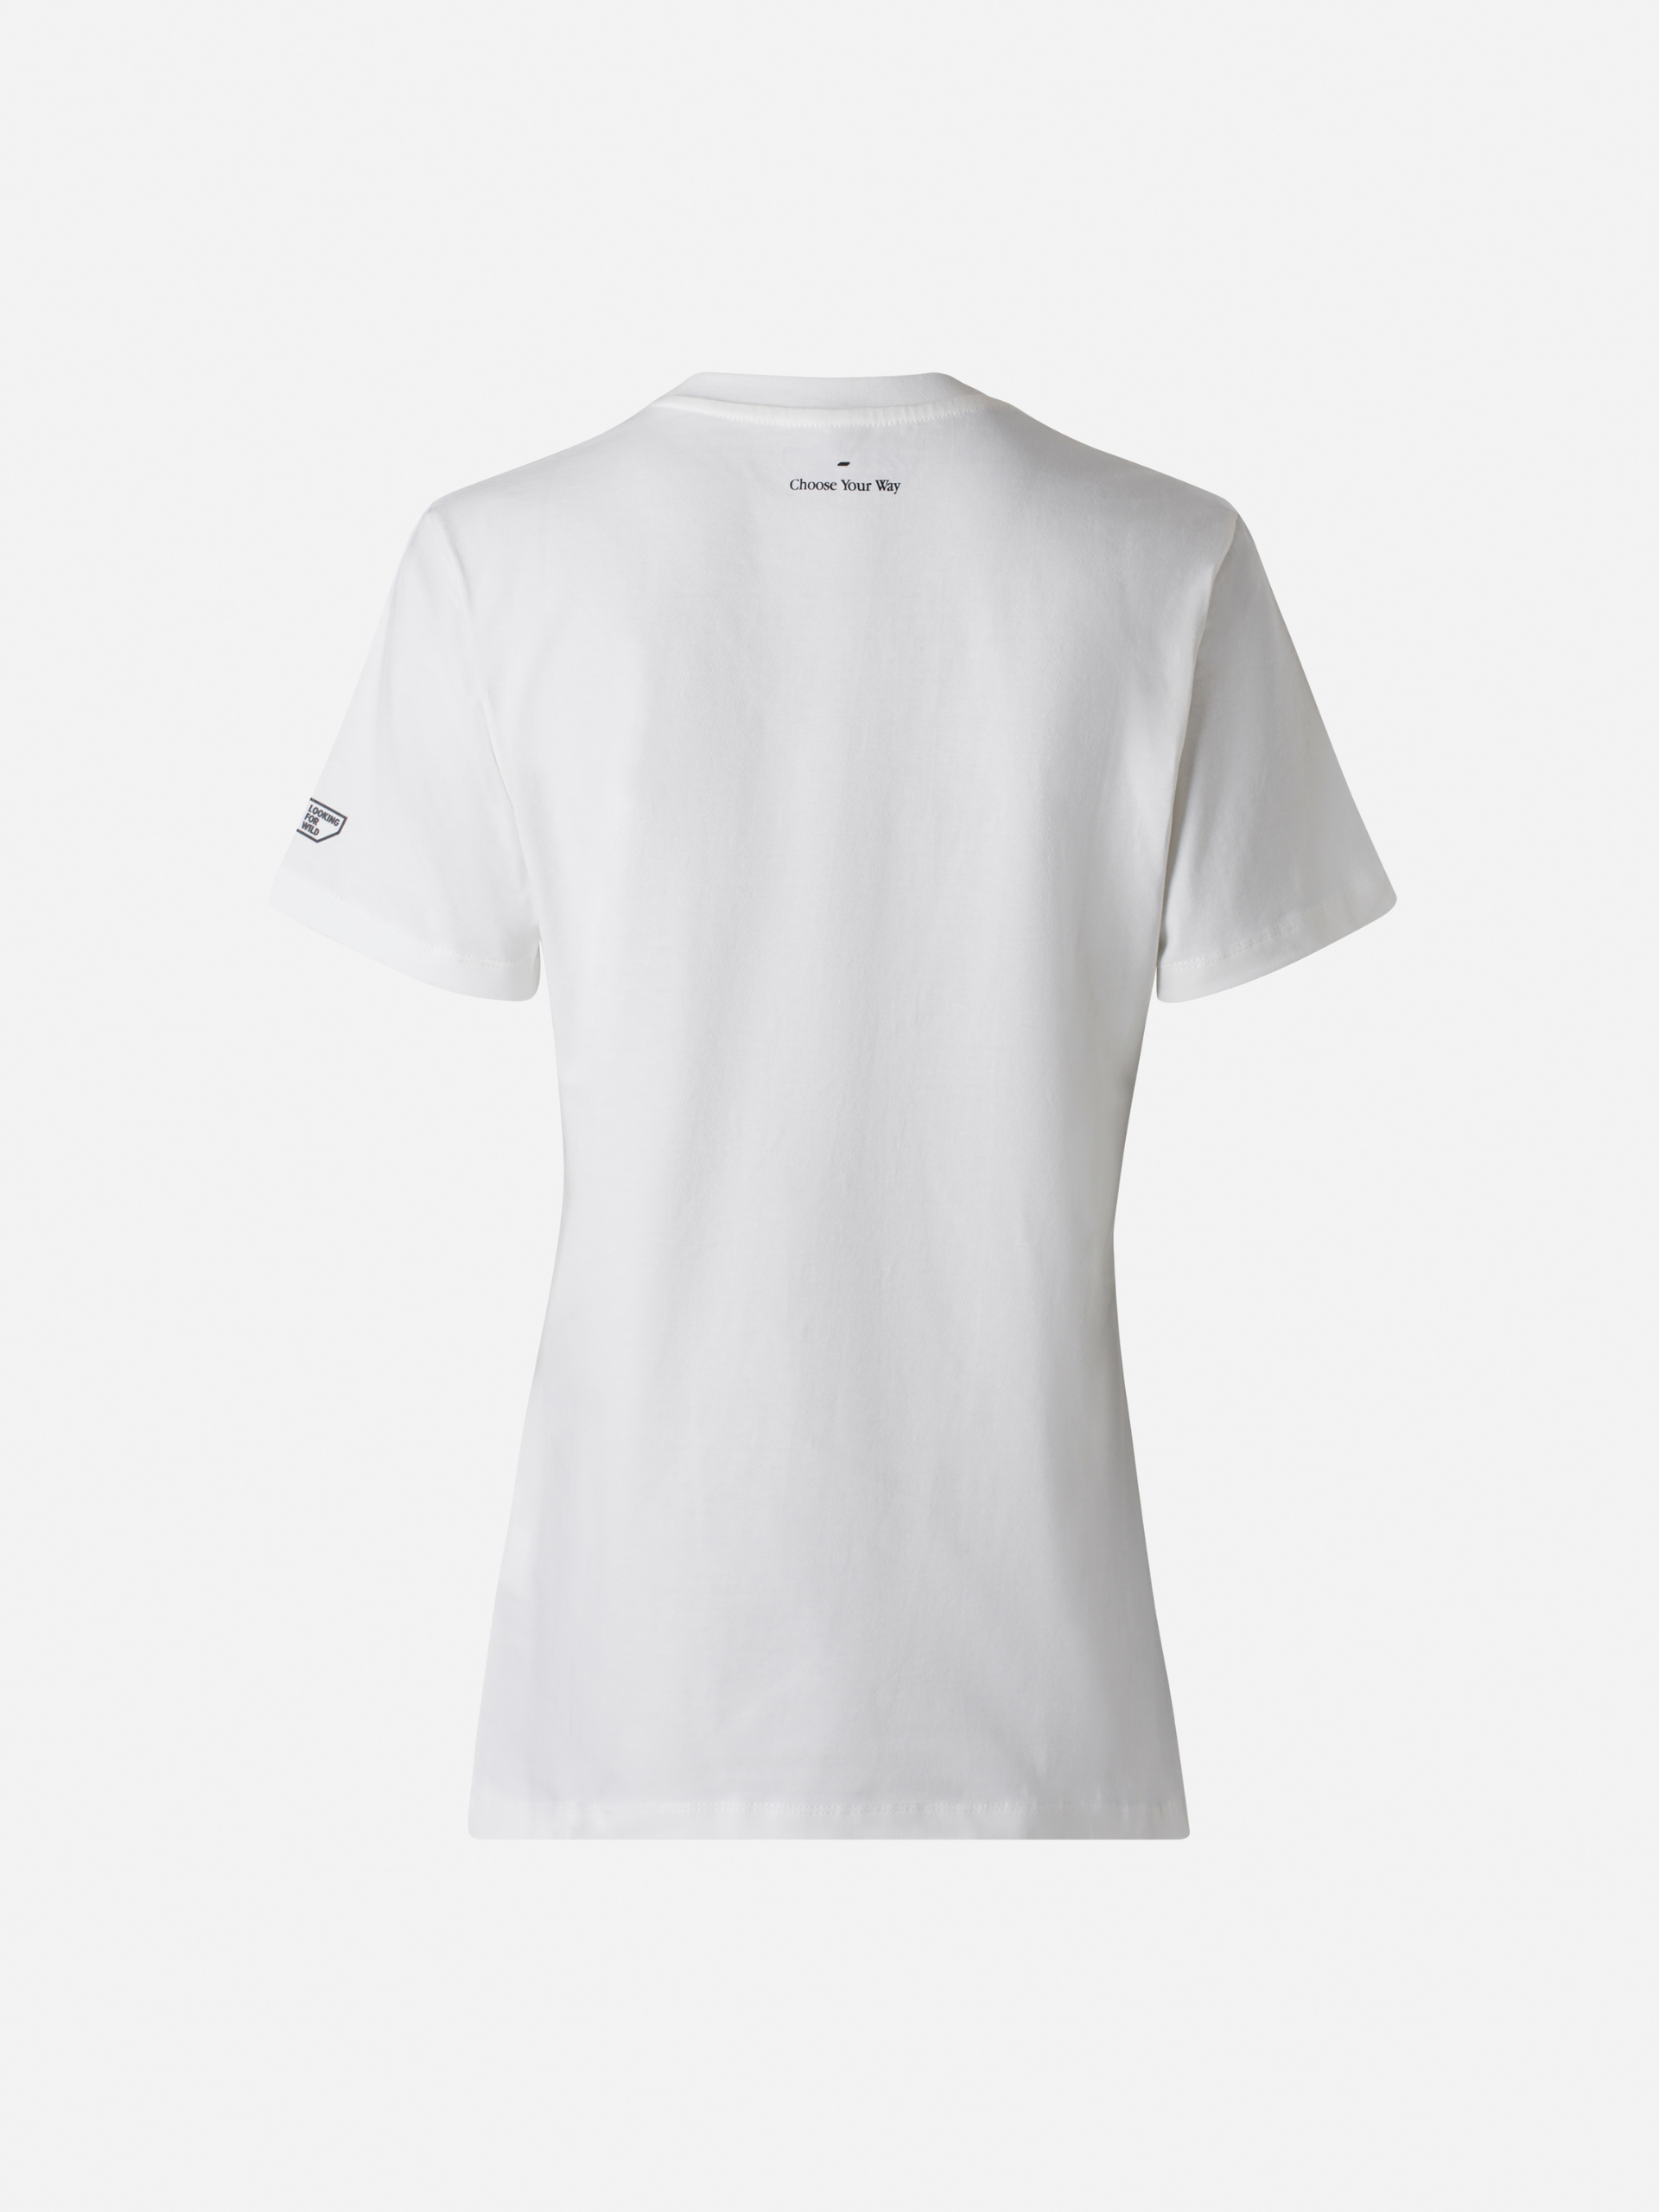 Climb Your Way Optic White unisex t-shirt